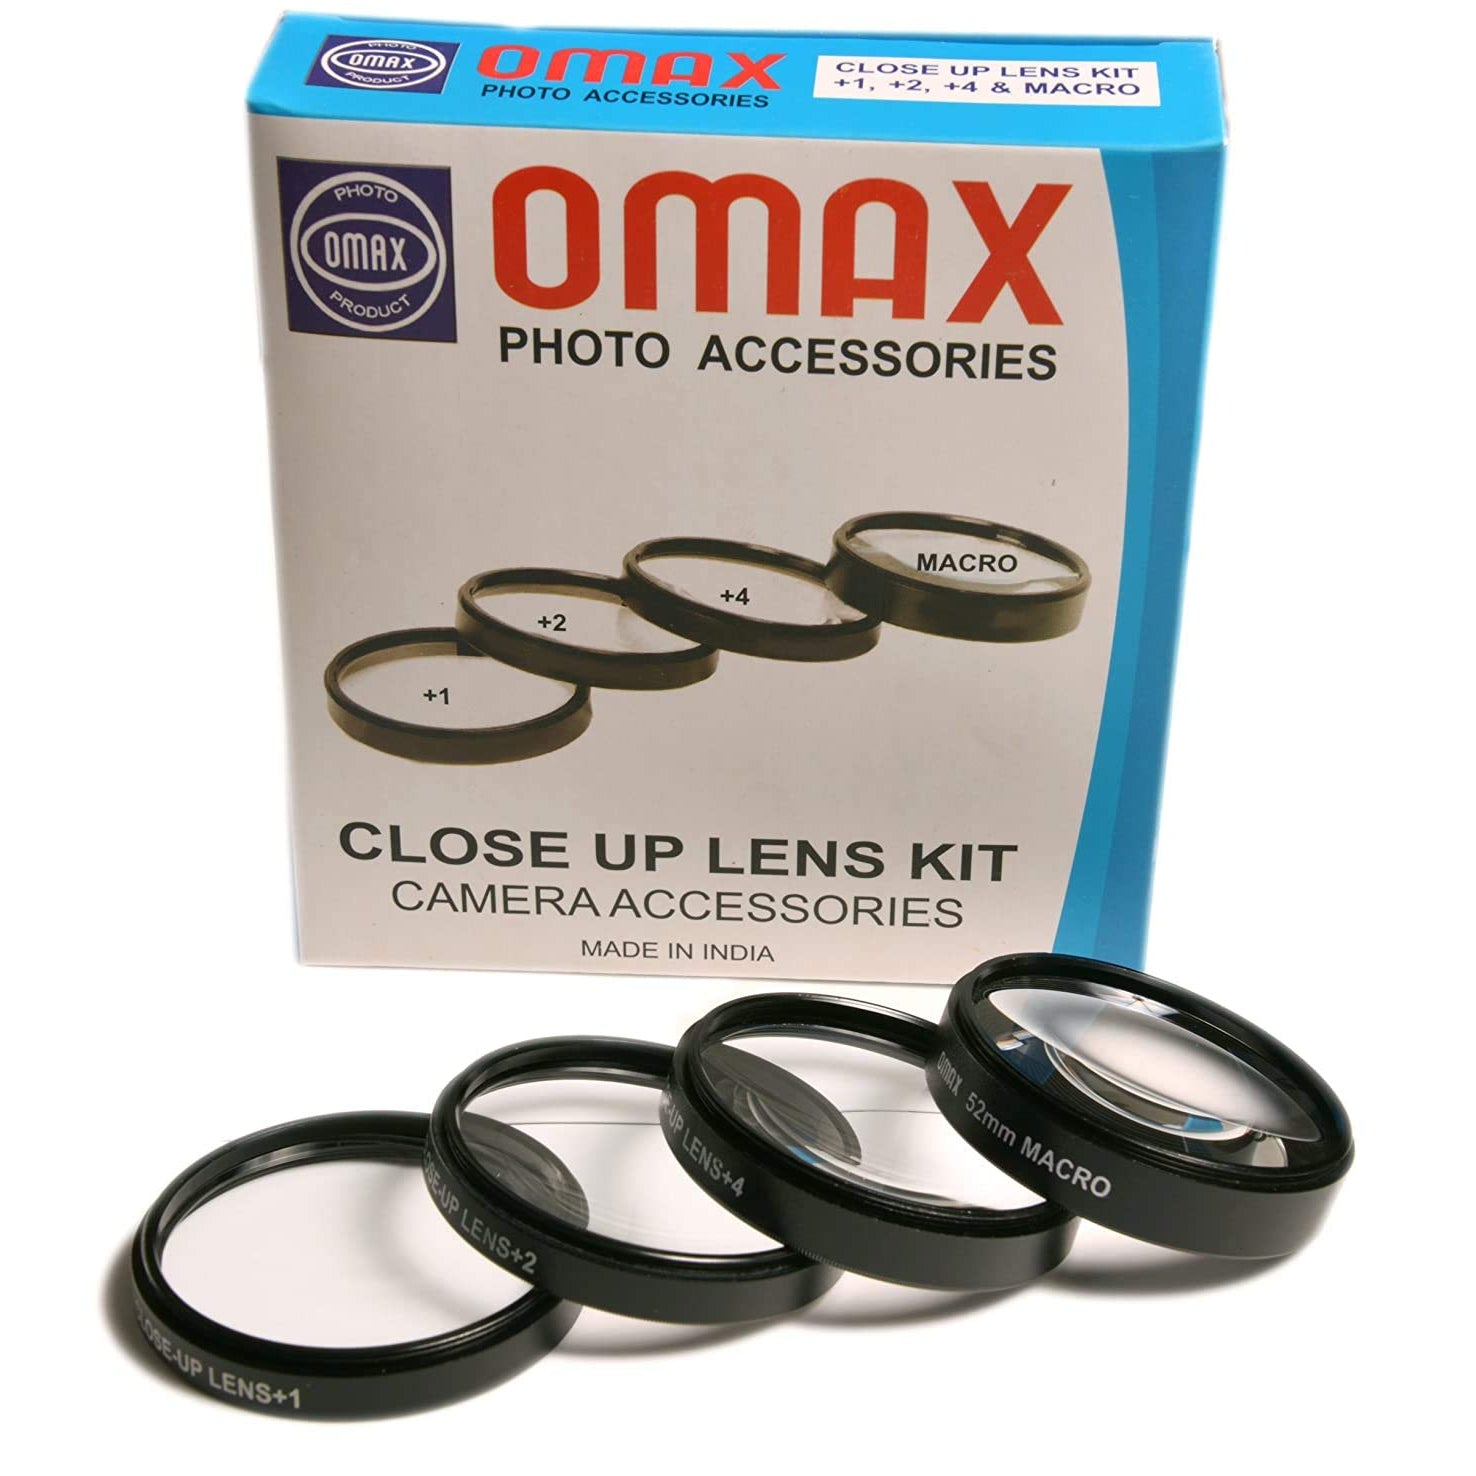 Omax 58mm closeup lens kit for 58mm front threaded lenses - The Camerashop